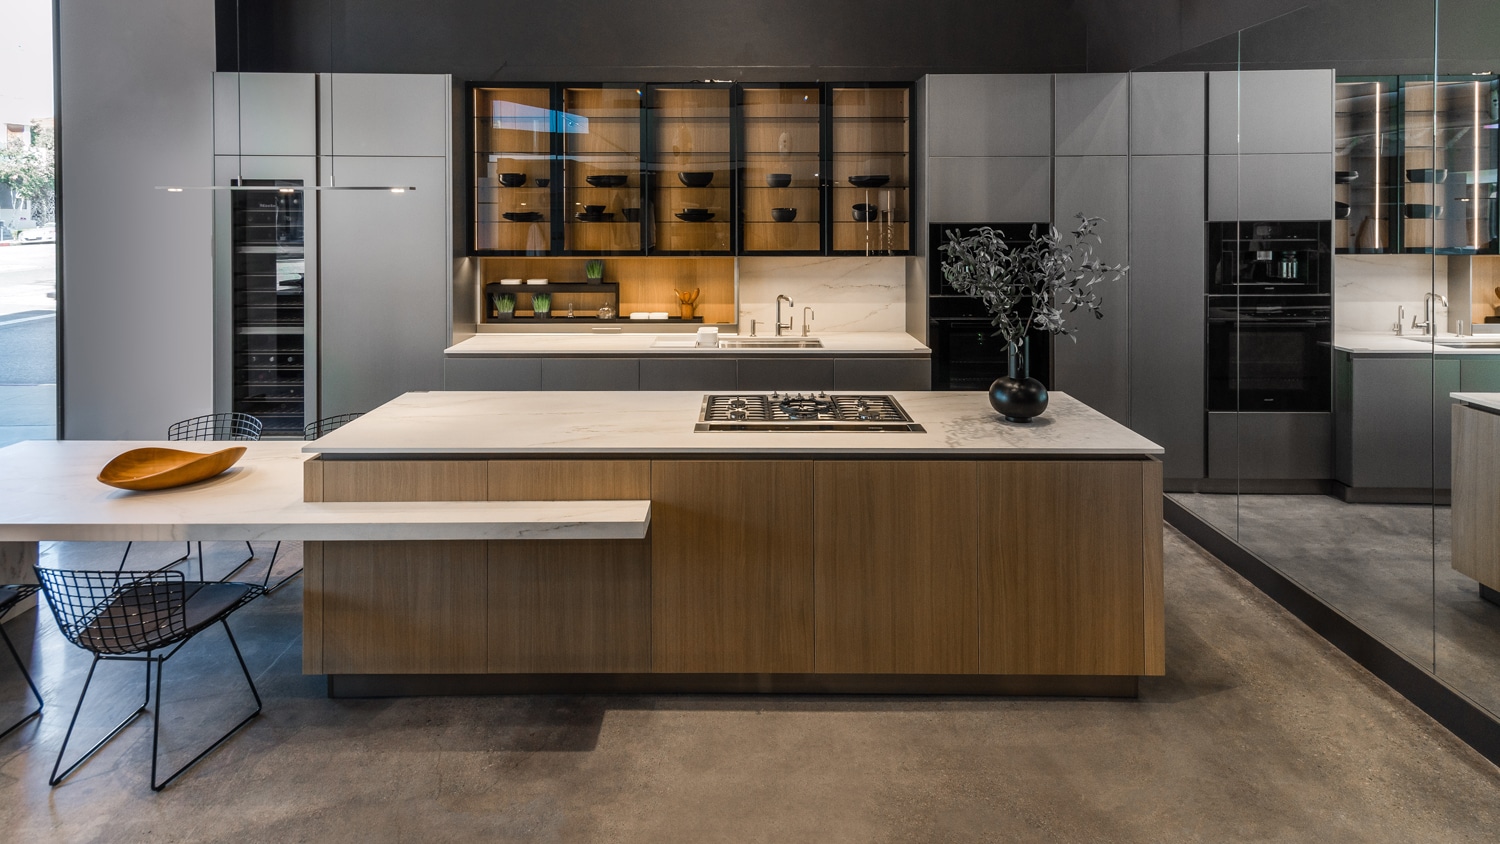 Yota luxury kitchen at MandiCasa Los Angeles. Ambra metallic lacquer and UV X-Duna oak wood finishes. 